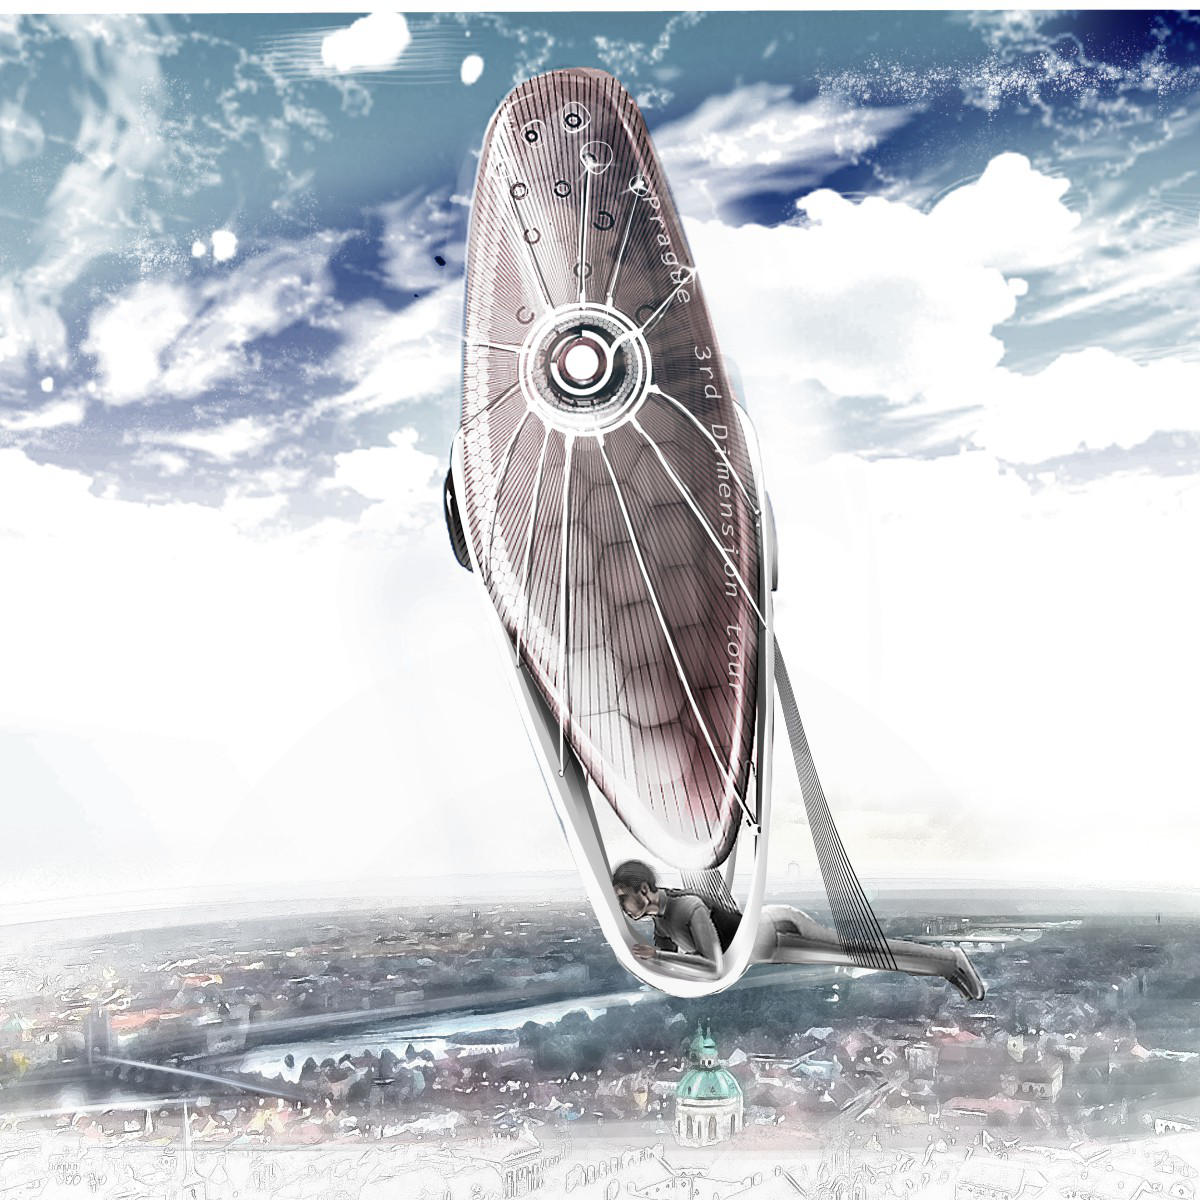 3rd Dimension: A Futuristic Airship by Riten Gojiya